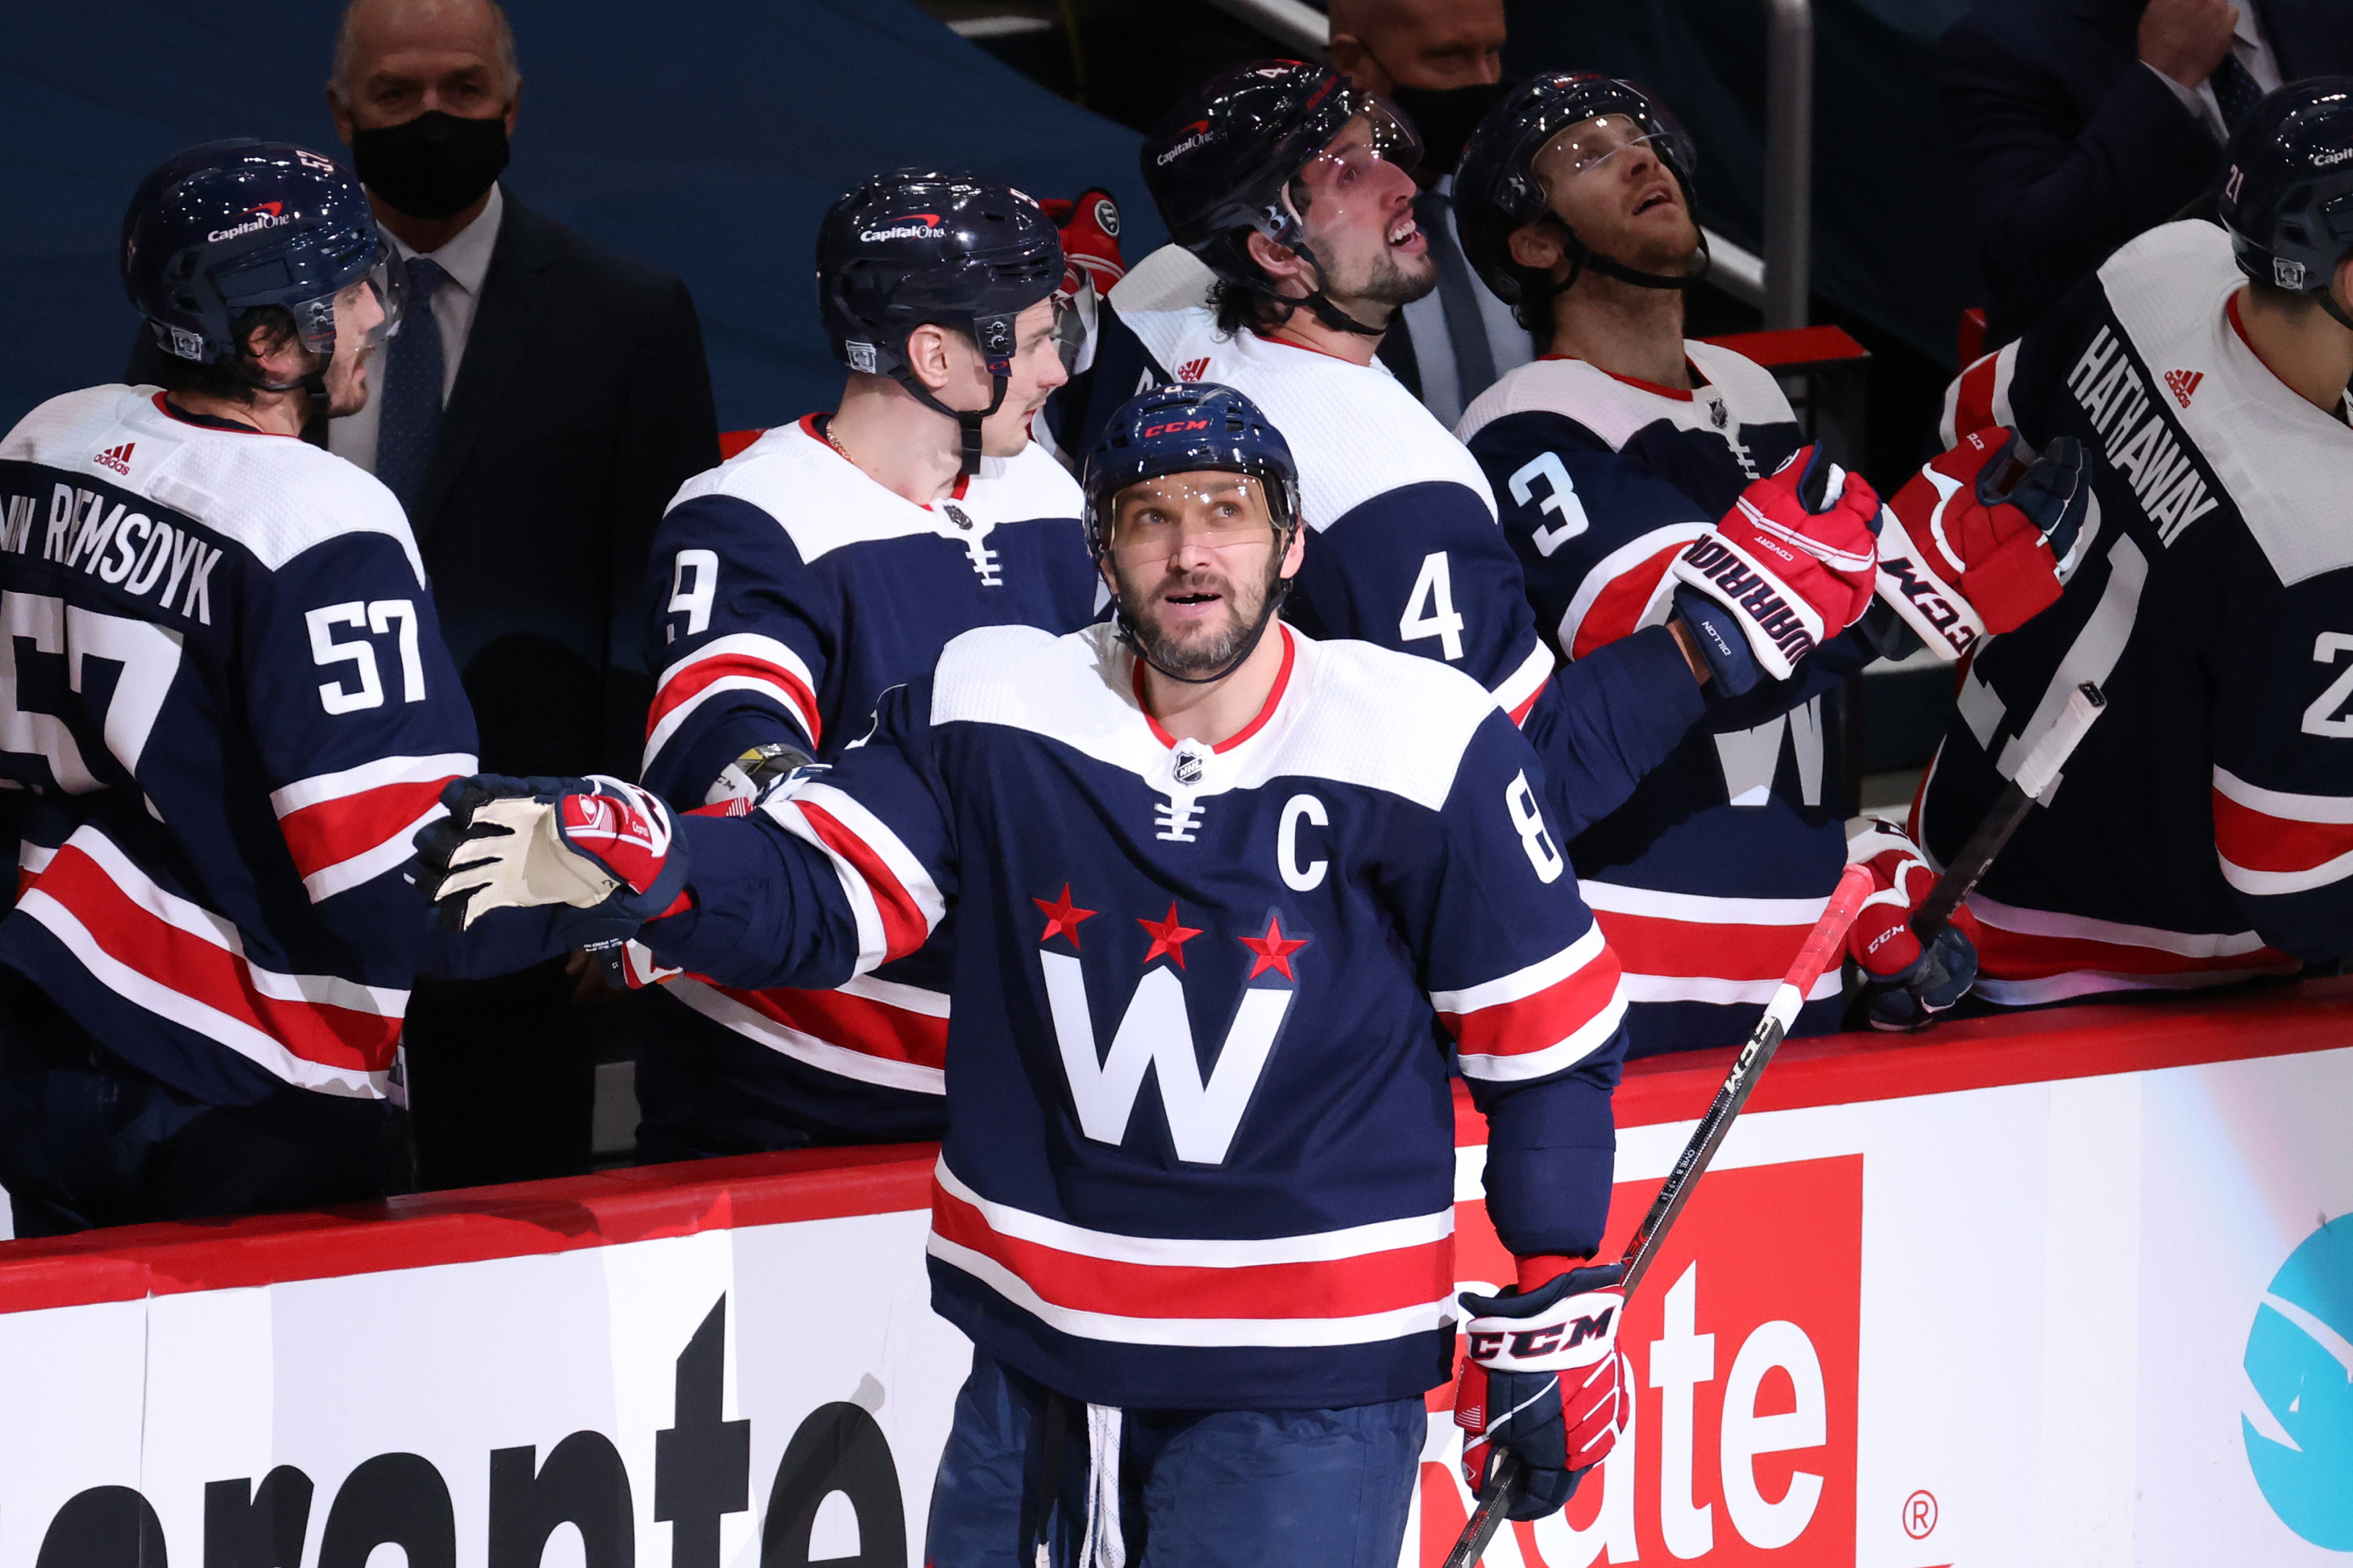 Capitals' Jakub Vrana Added To NHL's COVID-19 Protocol List